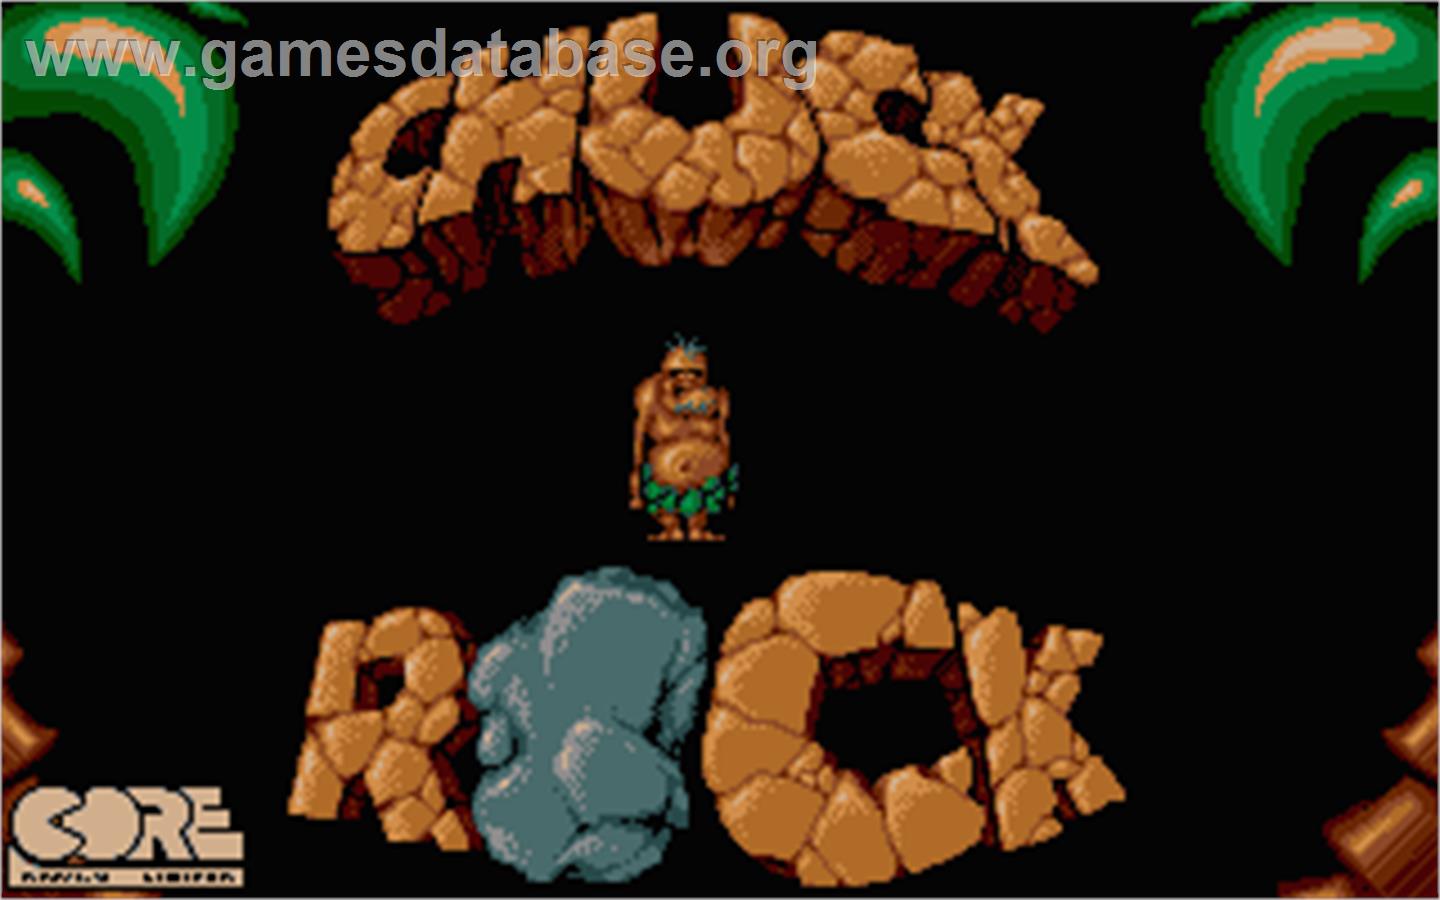 Chuckie Egg - Atari ST - Artwork - Title Screen